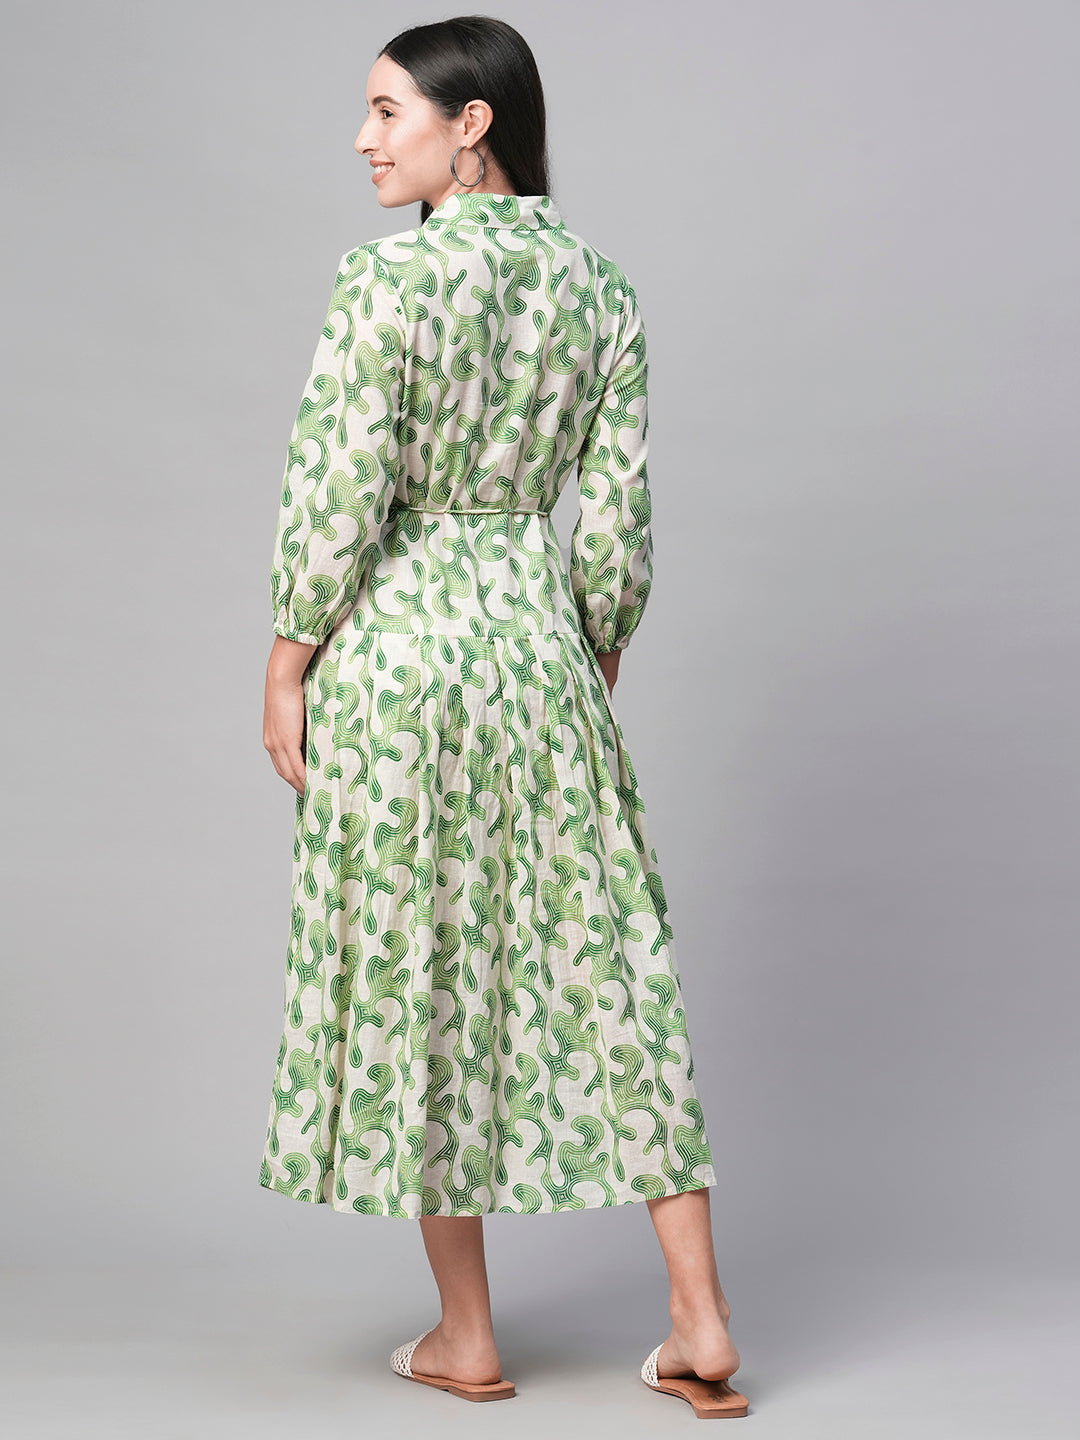 Buy Women's Cotton Flax Semi Formal Wear Regular Fit Dress|Cottonworld